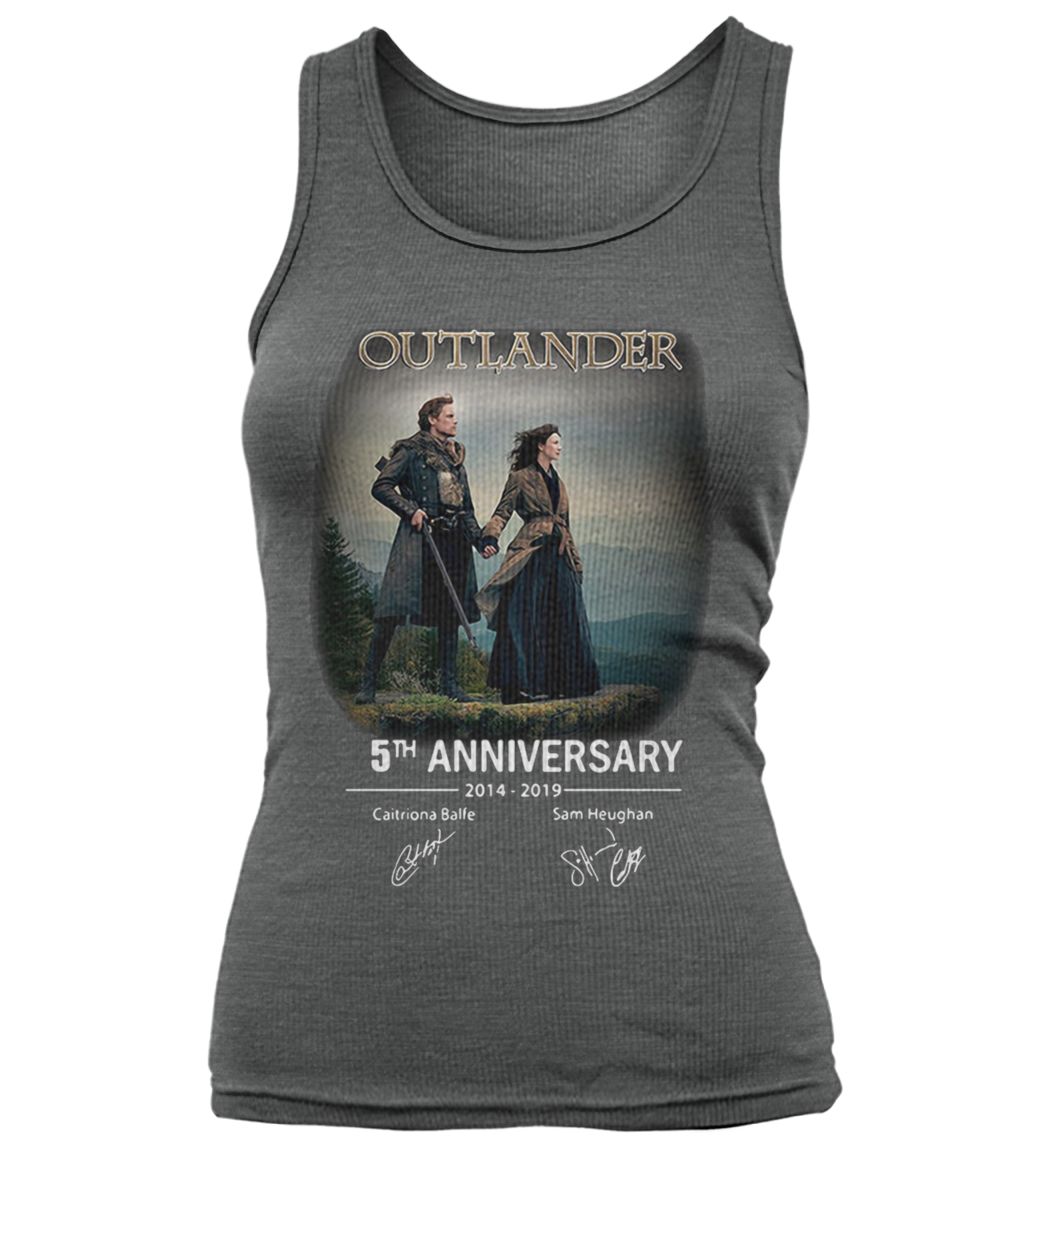 Outlander 5th anniversary 2014 2019 caitriona balfe sam heughan signatures women's tank top